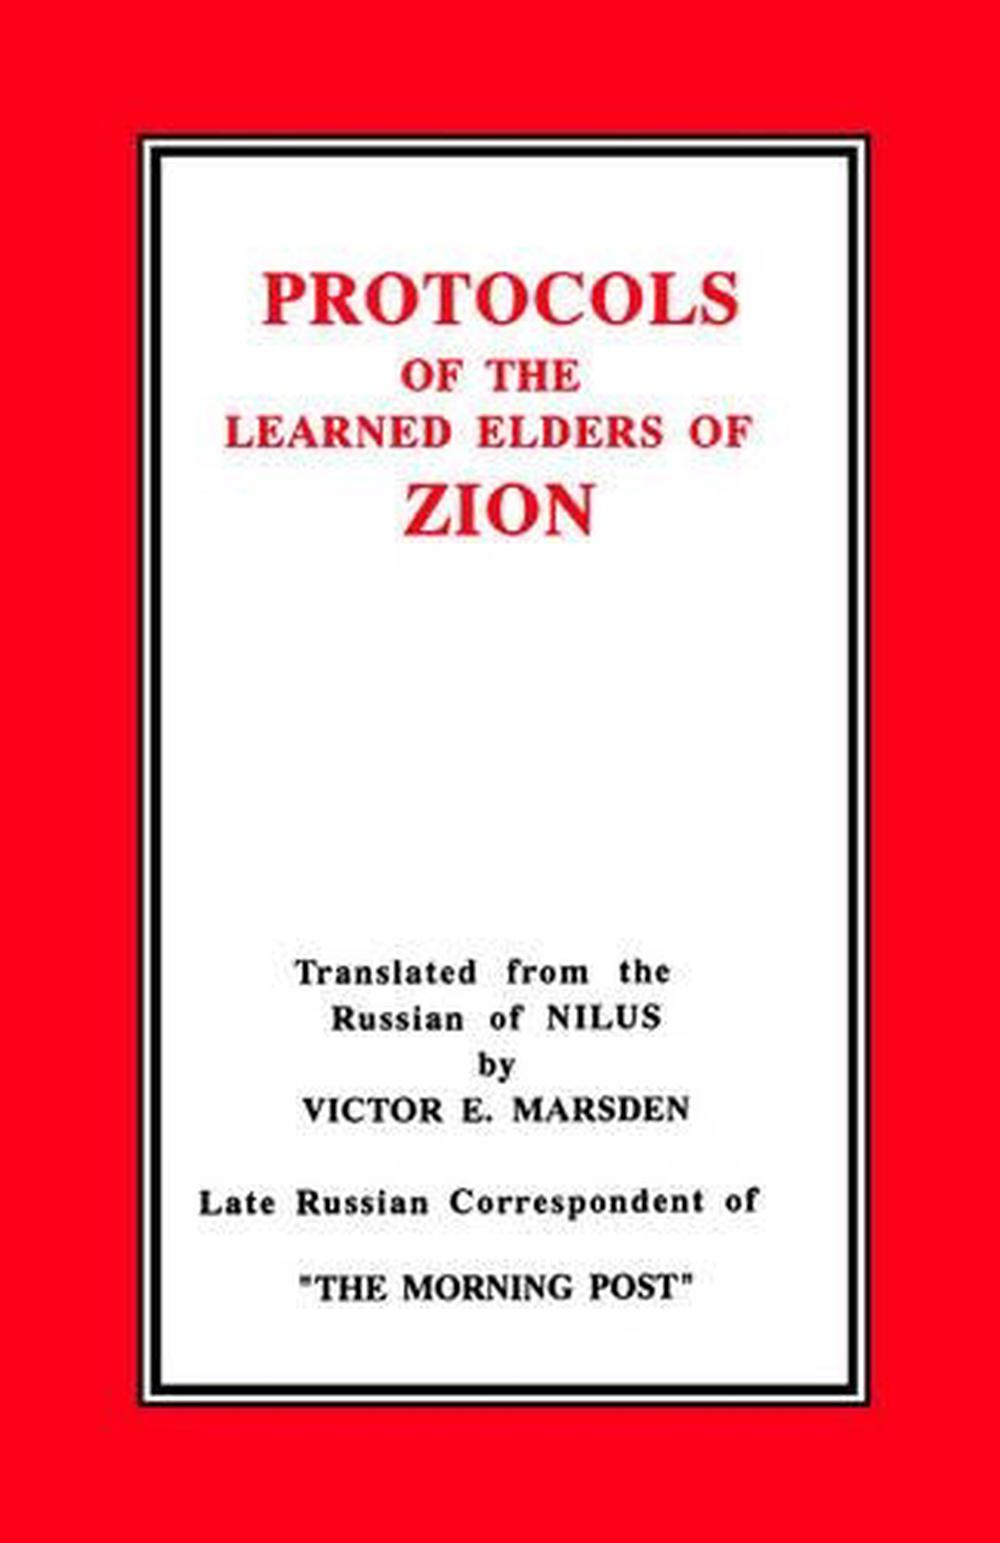 philips serial xpress protocols of zion